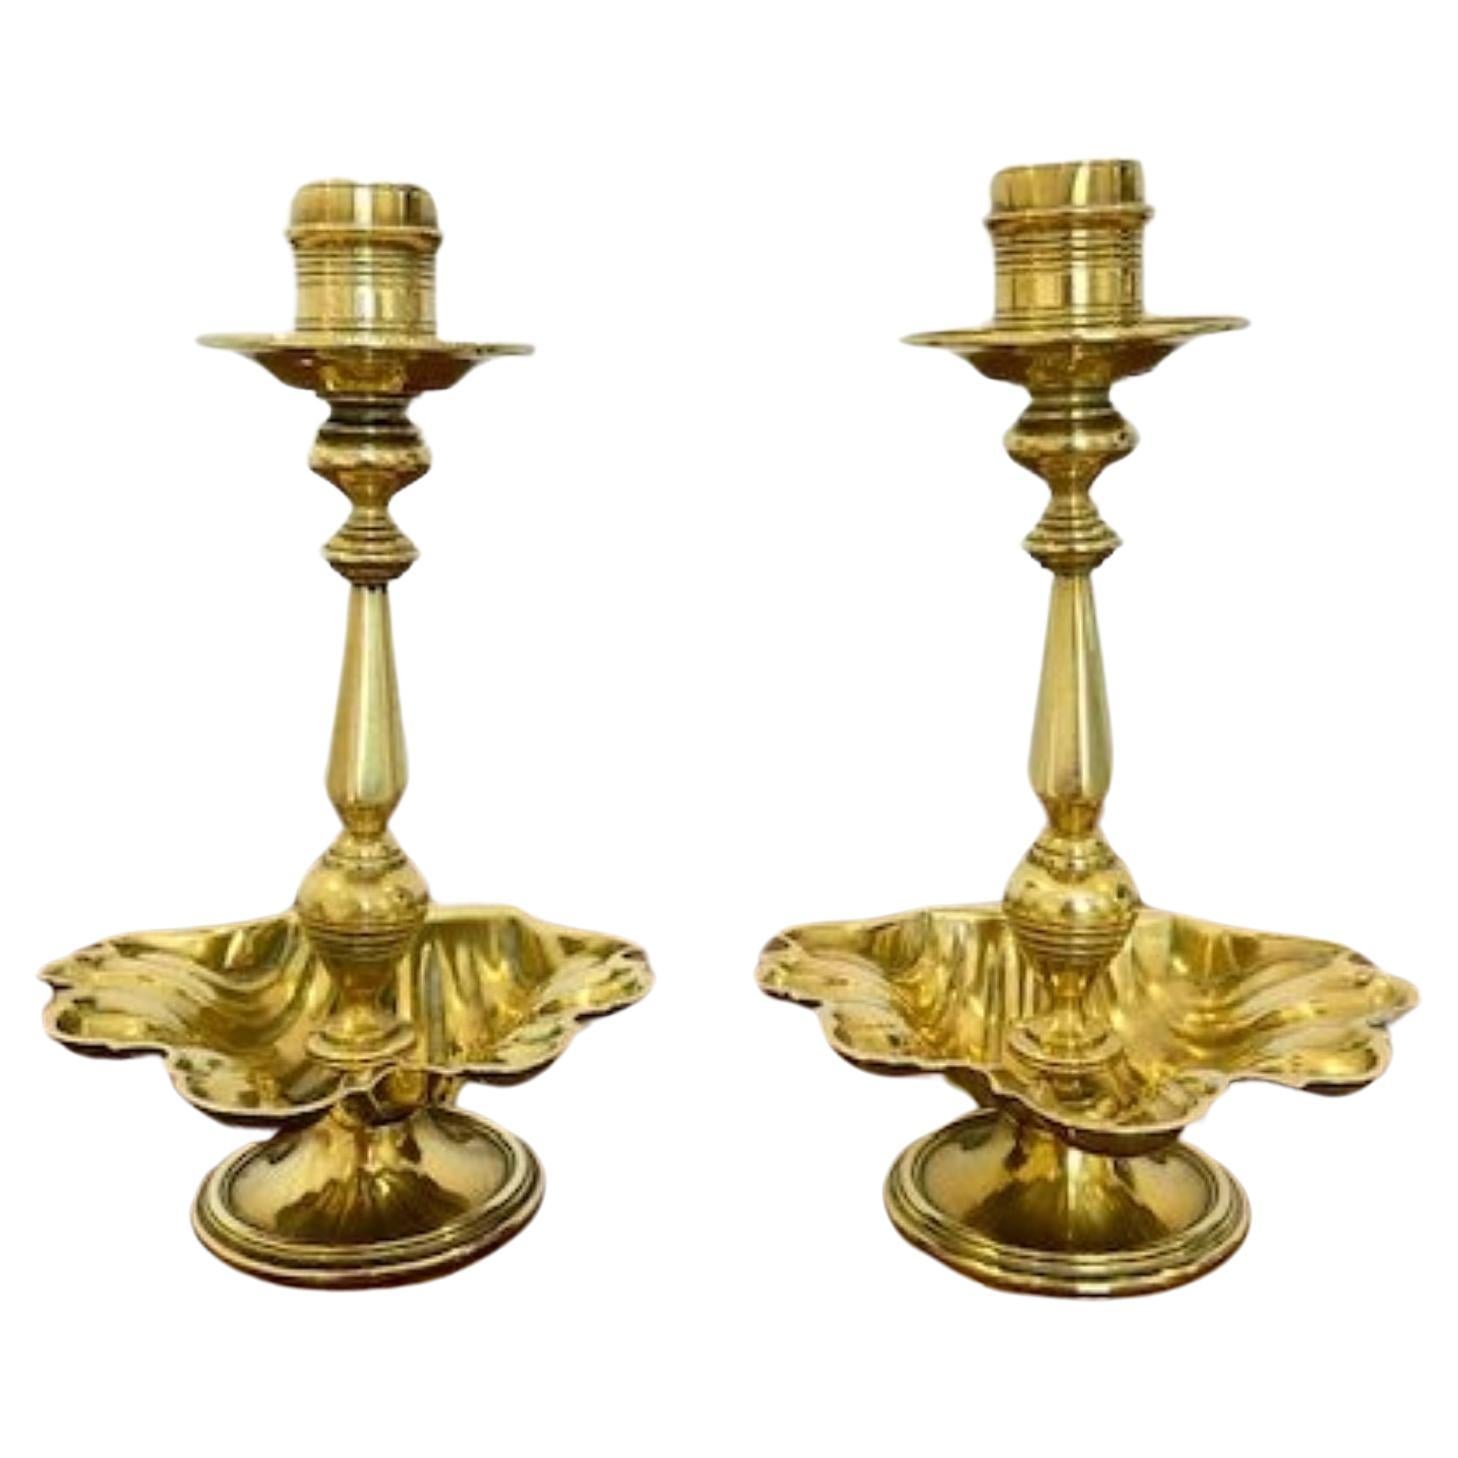 Unusual Pair of Antique Brass Candlesticks